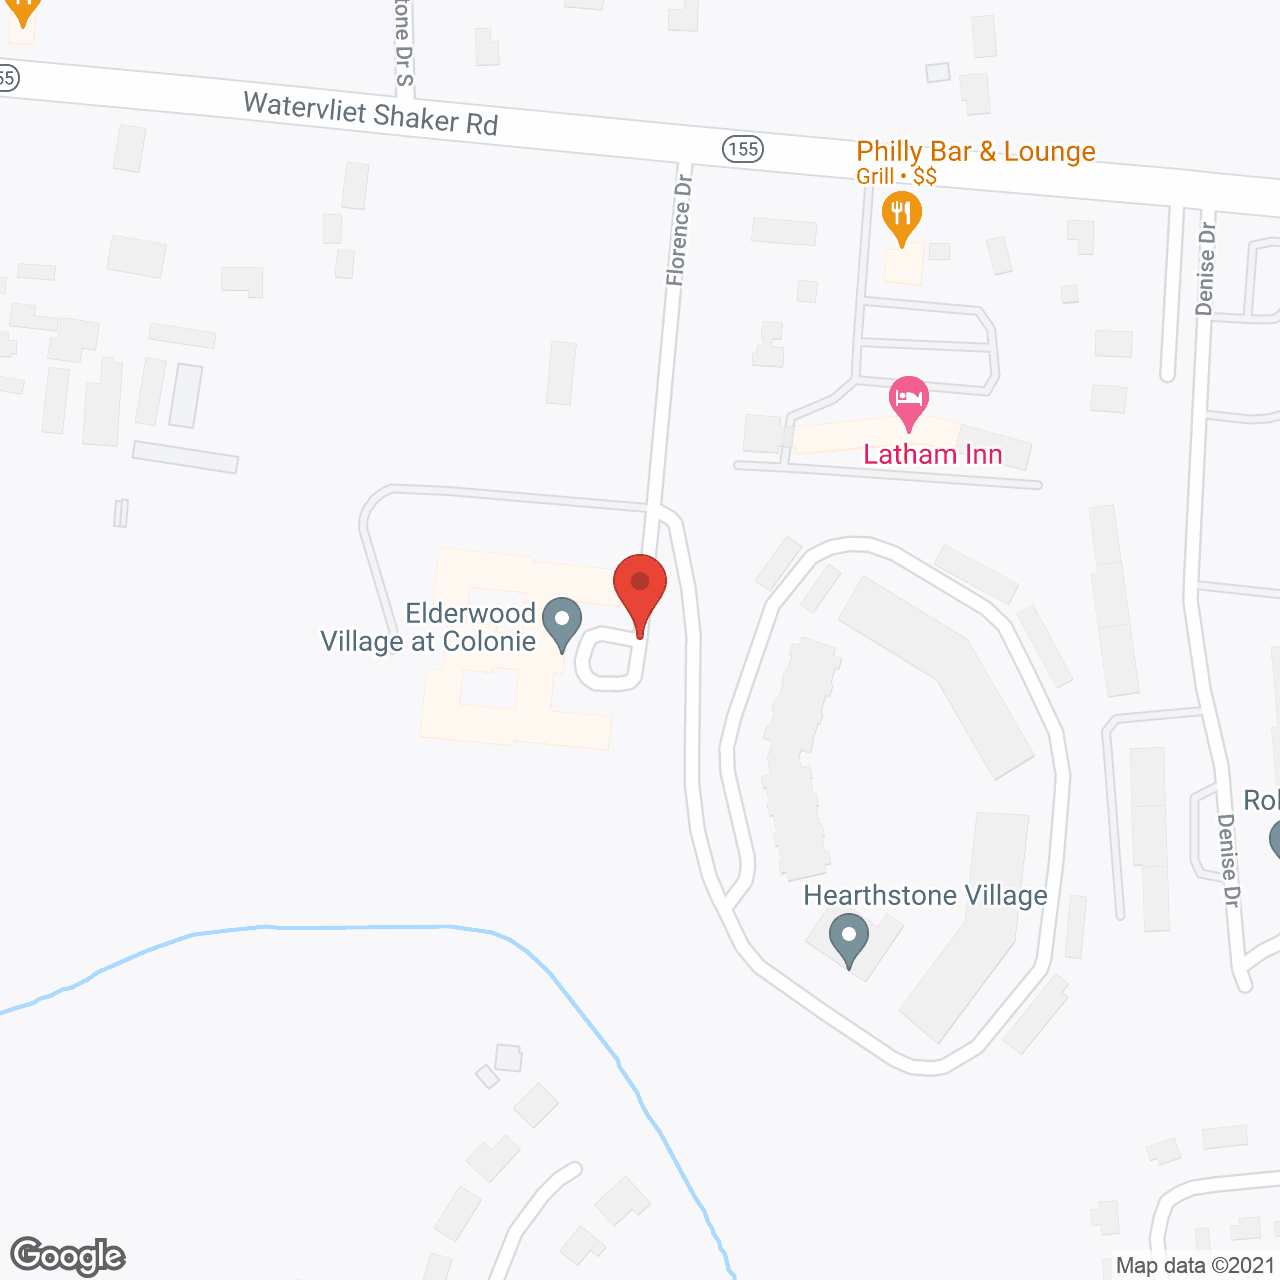 Hearthstone Village in google map